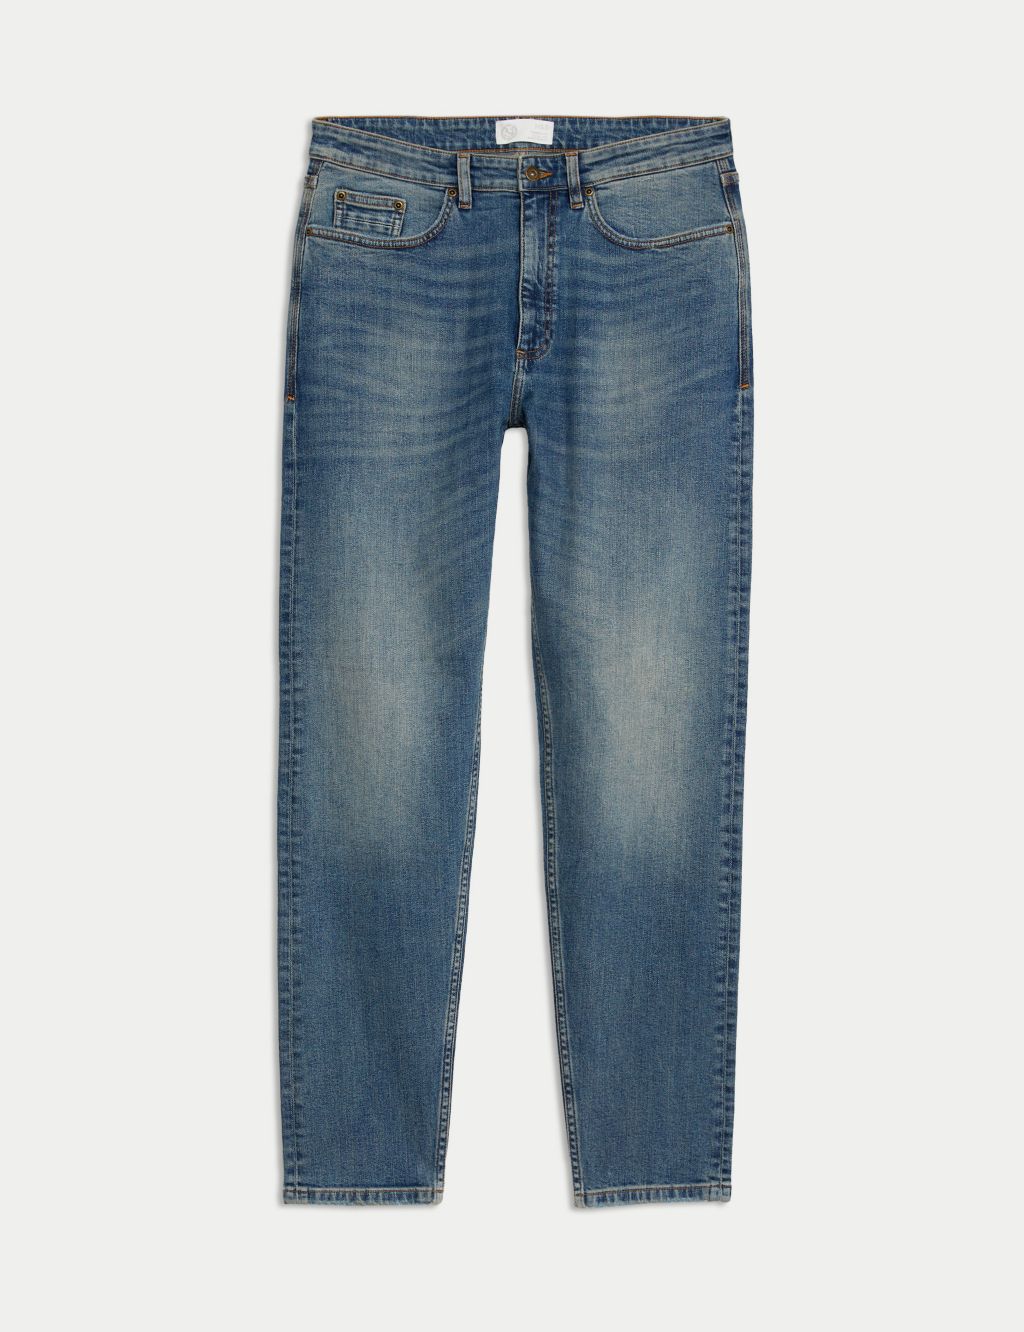 Tapered Fit Vintage Wash Stretch Jeans image 2